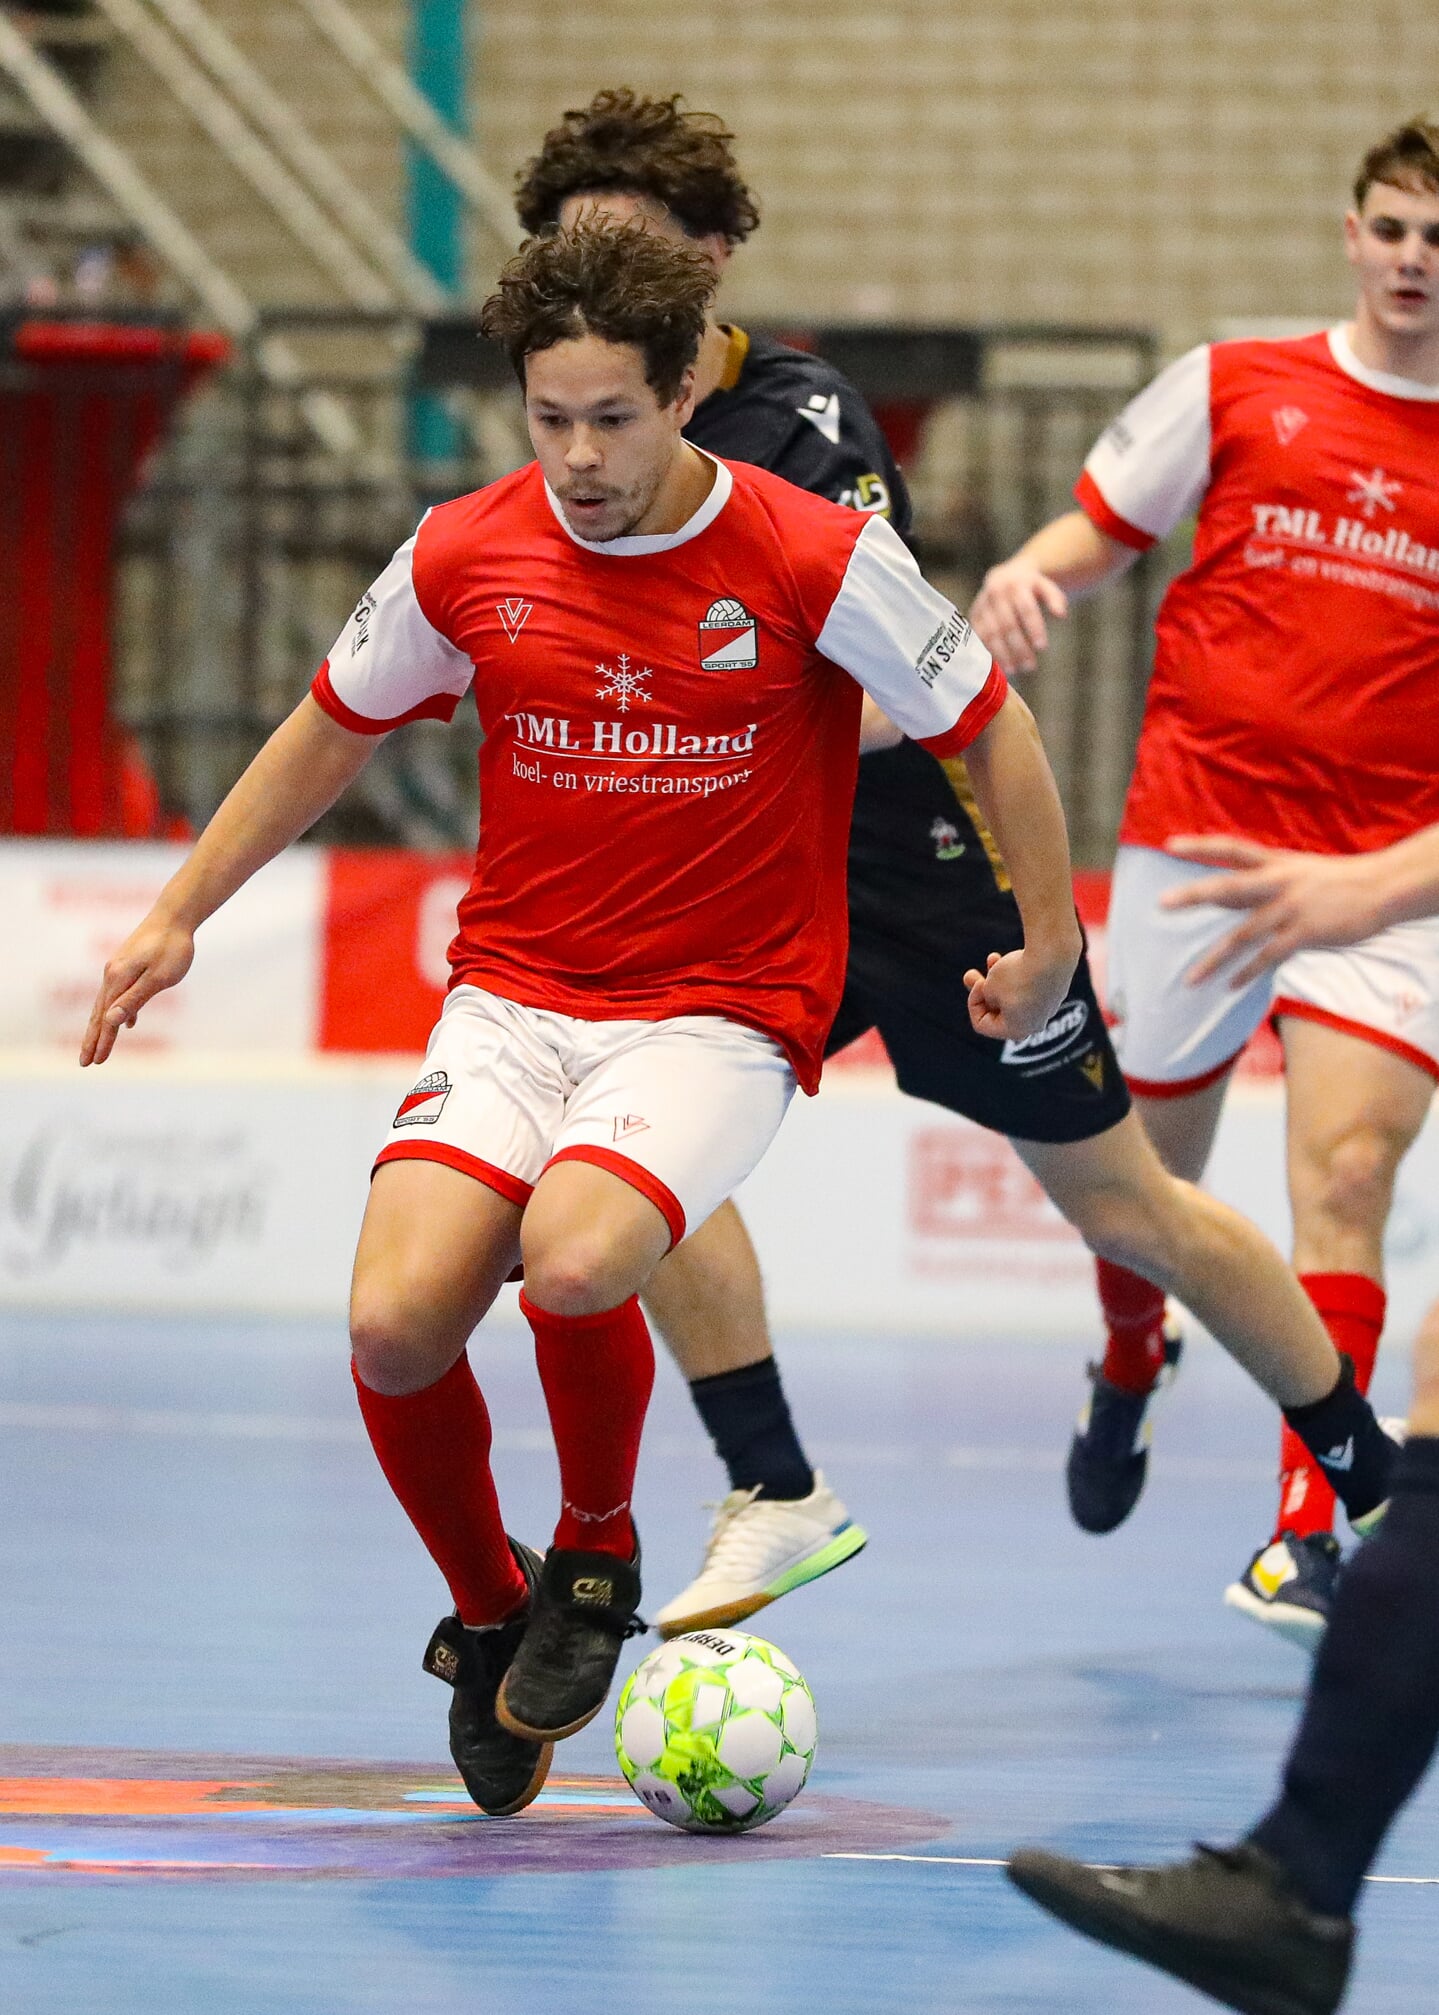 • Kozakken Boys - Leerdam Sport (4-0).